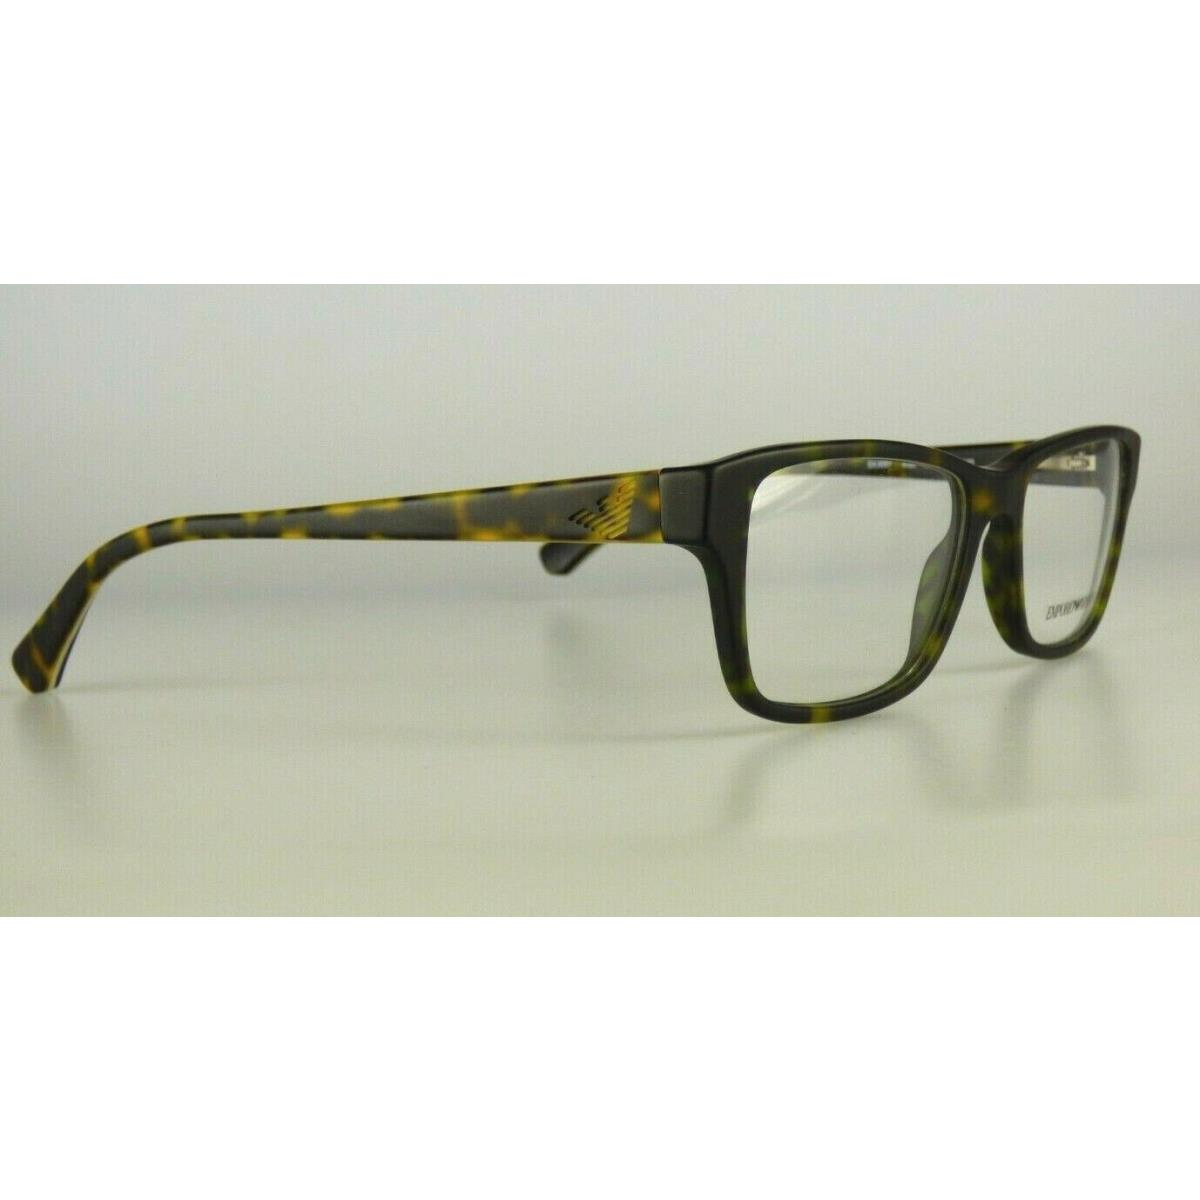 Emporio Armani eyeglasses  - 5026 Frame, Clear Lens 0